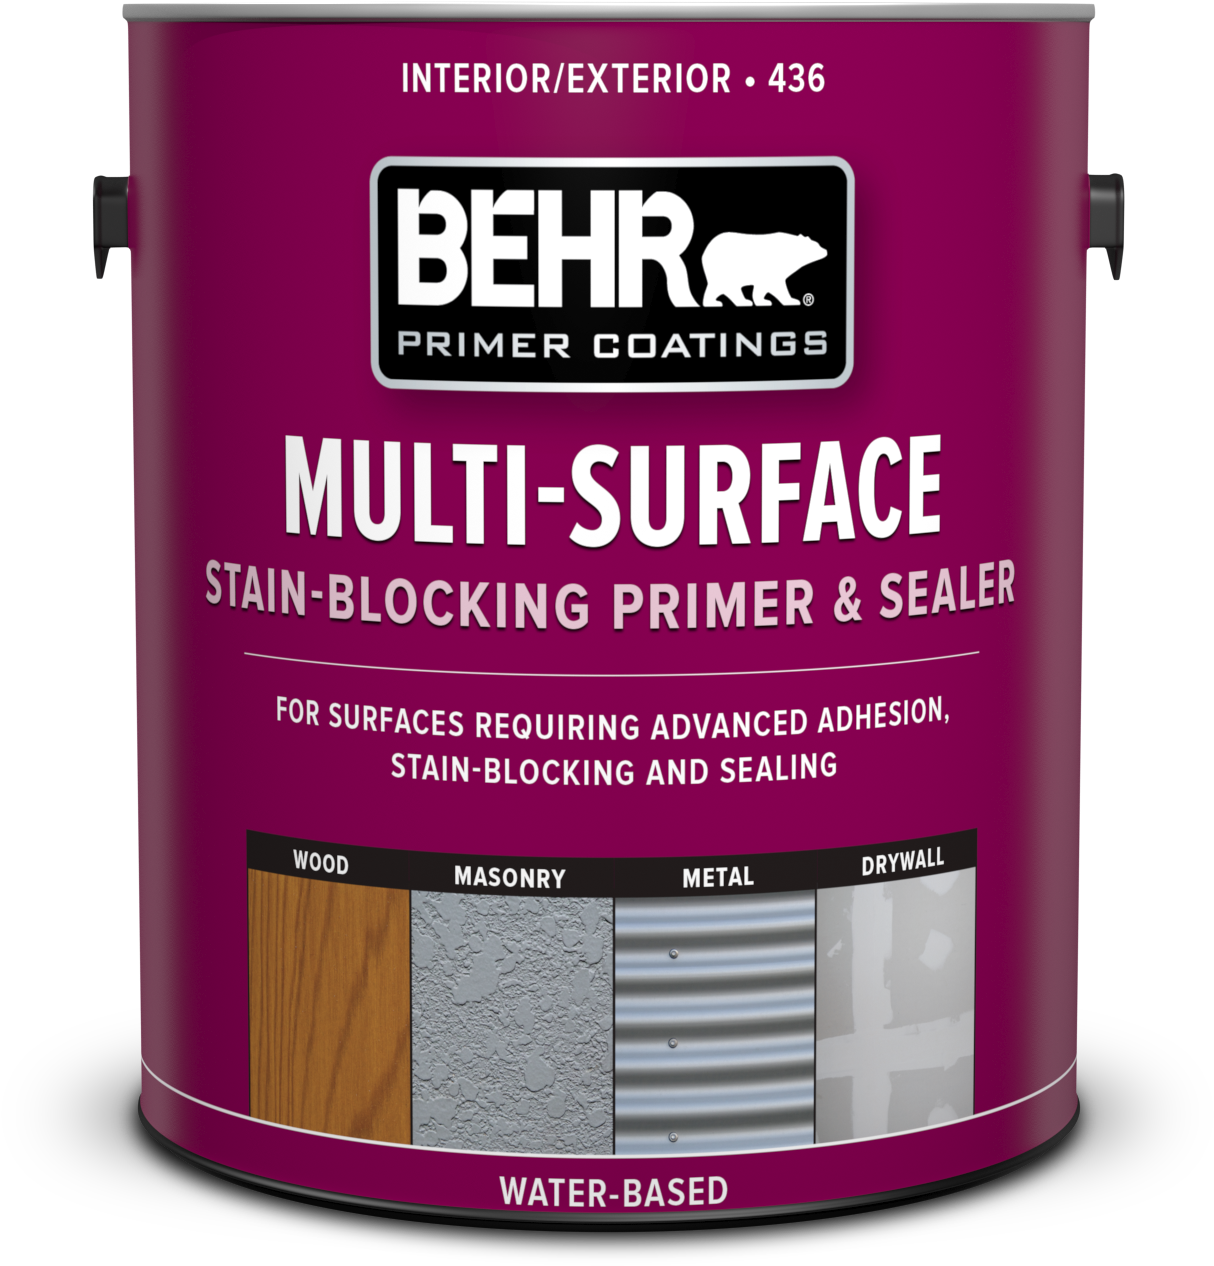 Behr Multi Surface Stain Blocking Primer Sealer Can PNG image